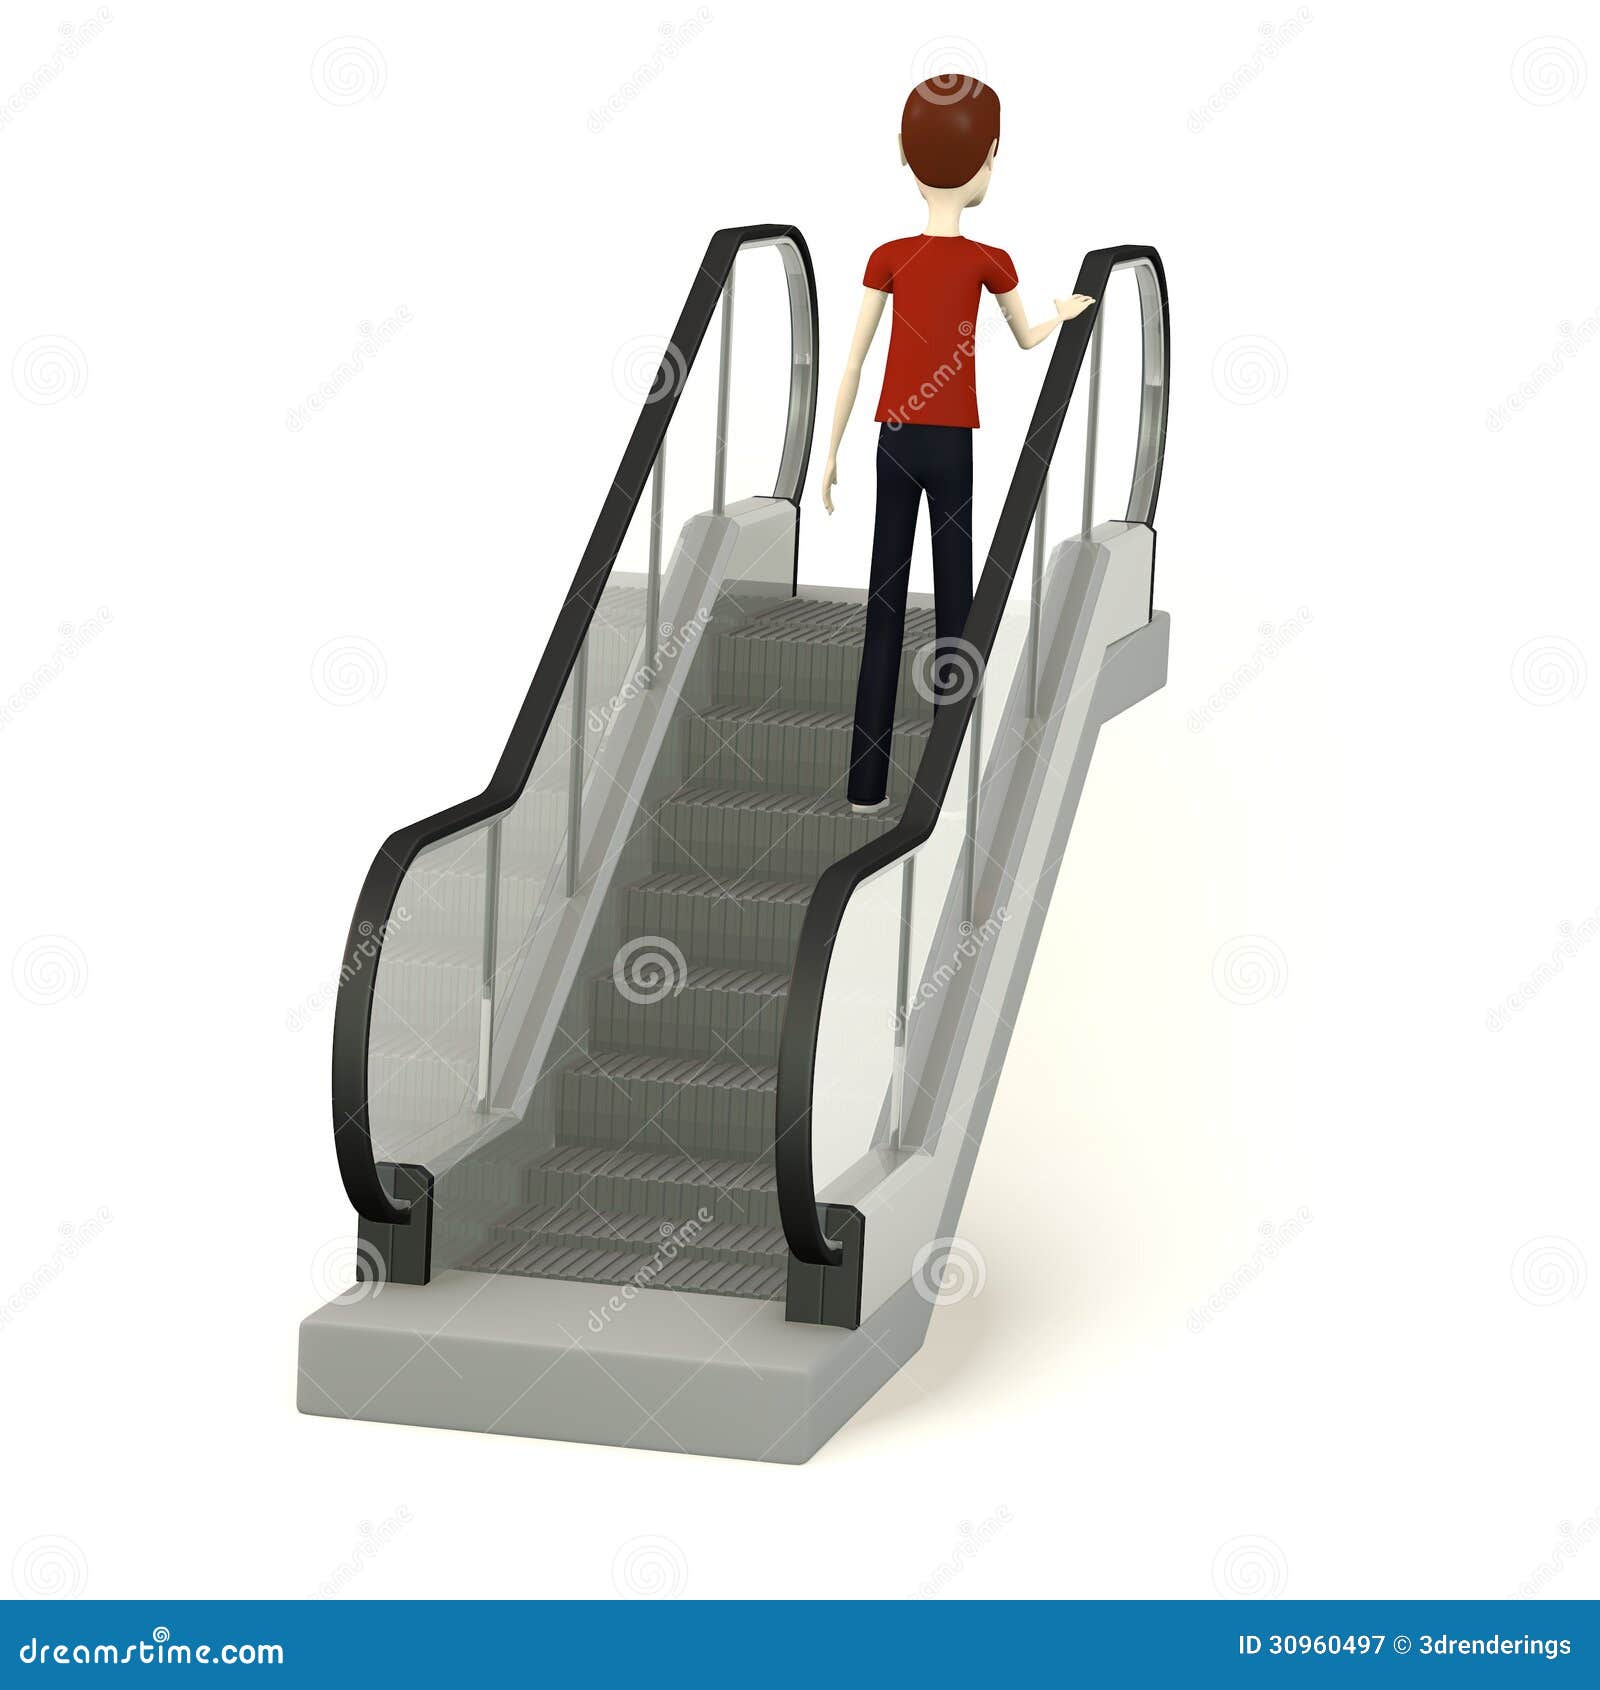 clipart of escalator - photo #20